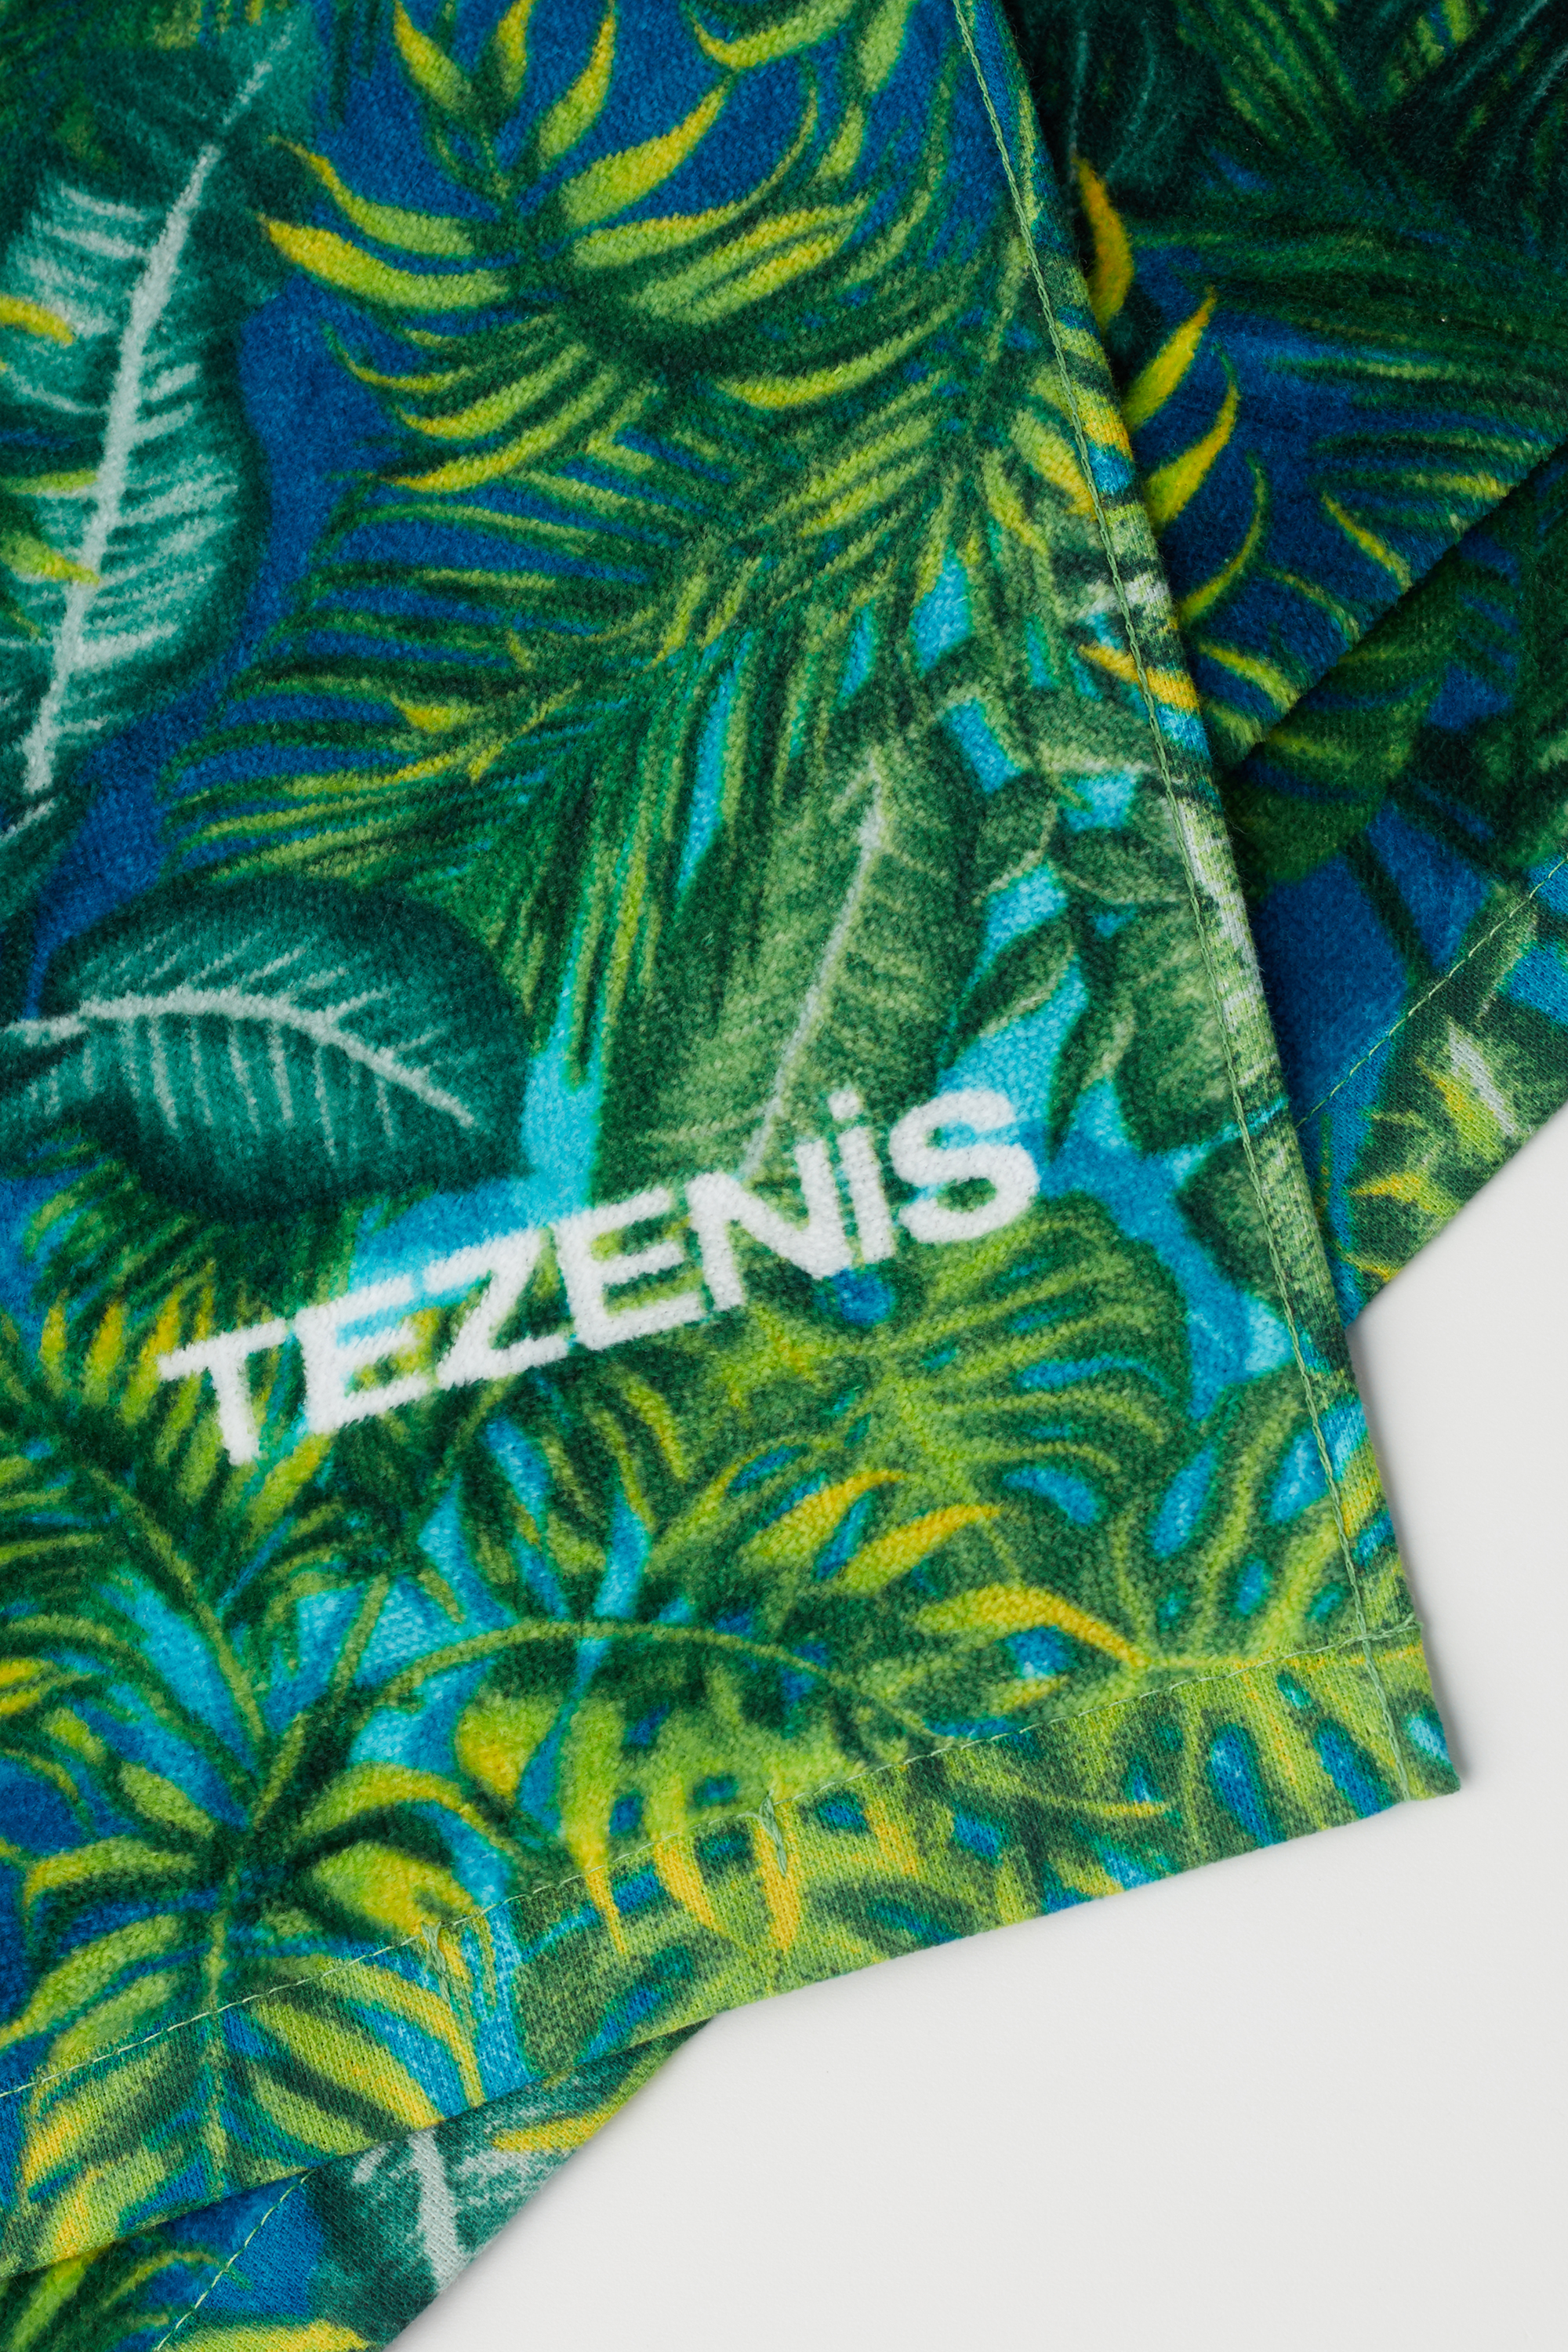 Printed Terry Cloth Beach Towel